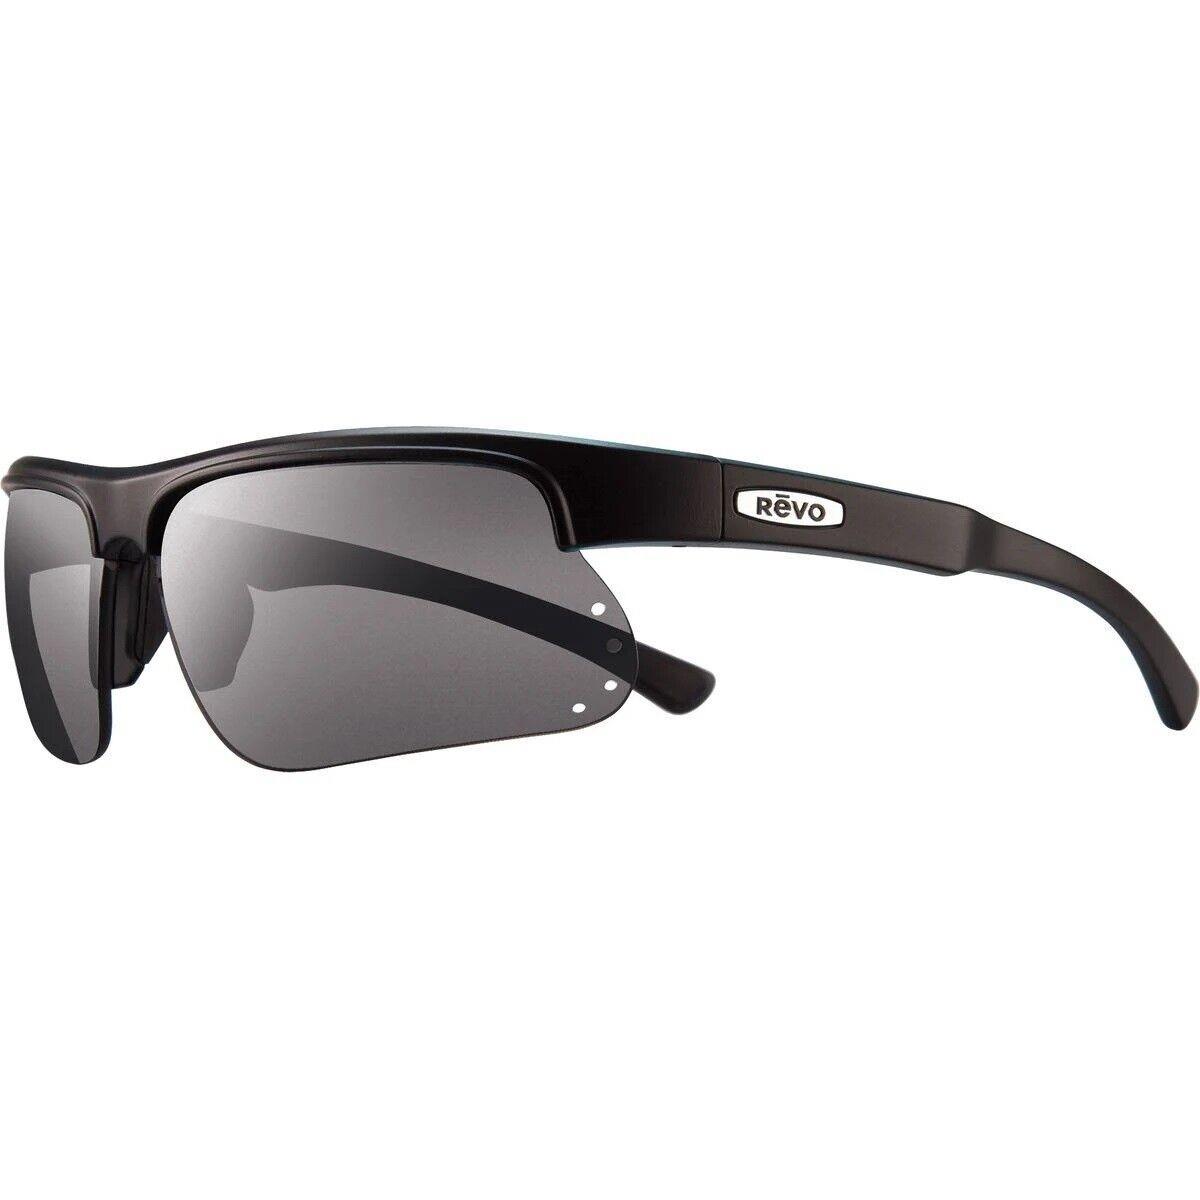 Revo Men`s Sunglasses Cusp 1025 19GY Matte Black Gray W/grey Polarized Lens - Frame: Matte Black, Lens: Gray